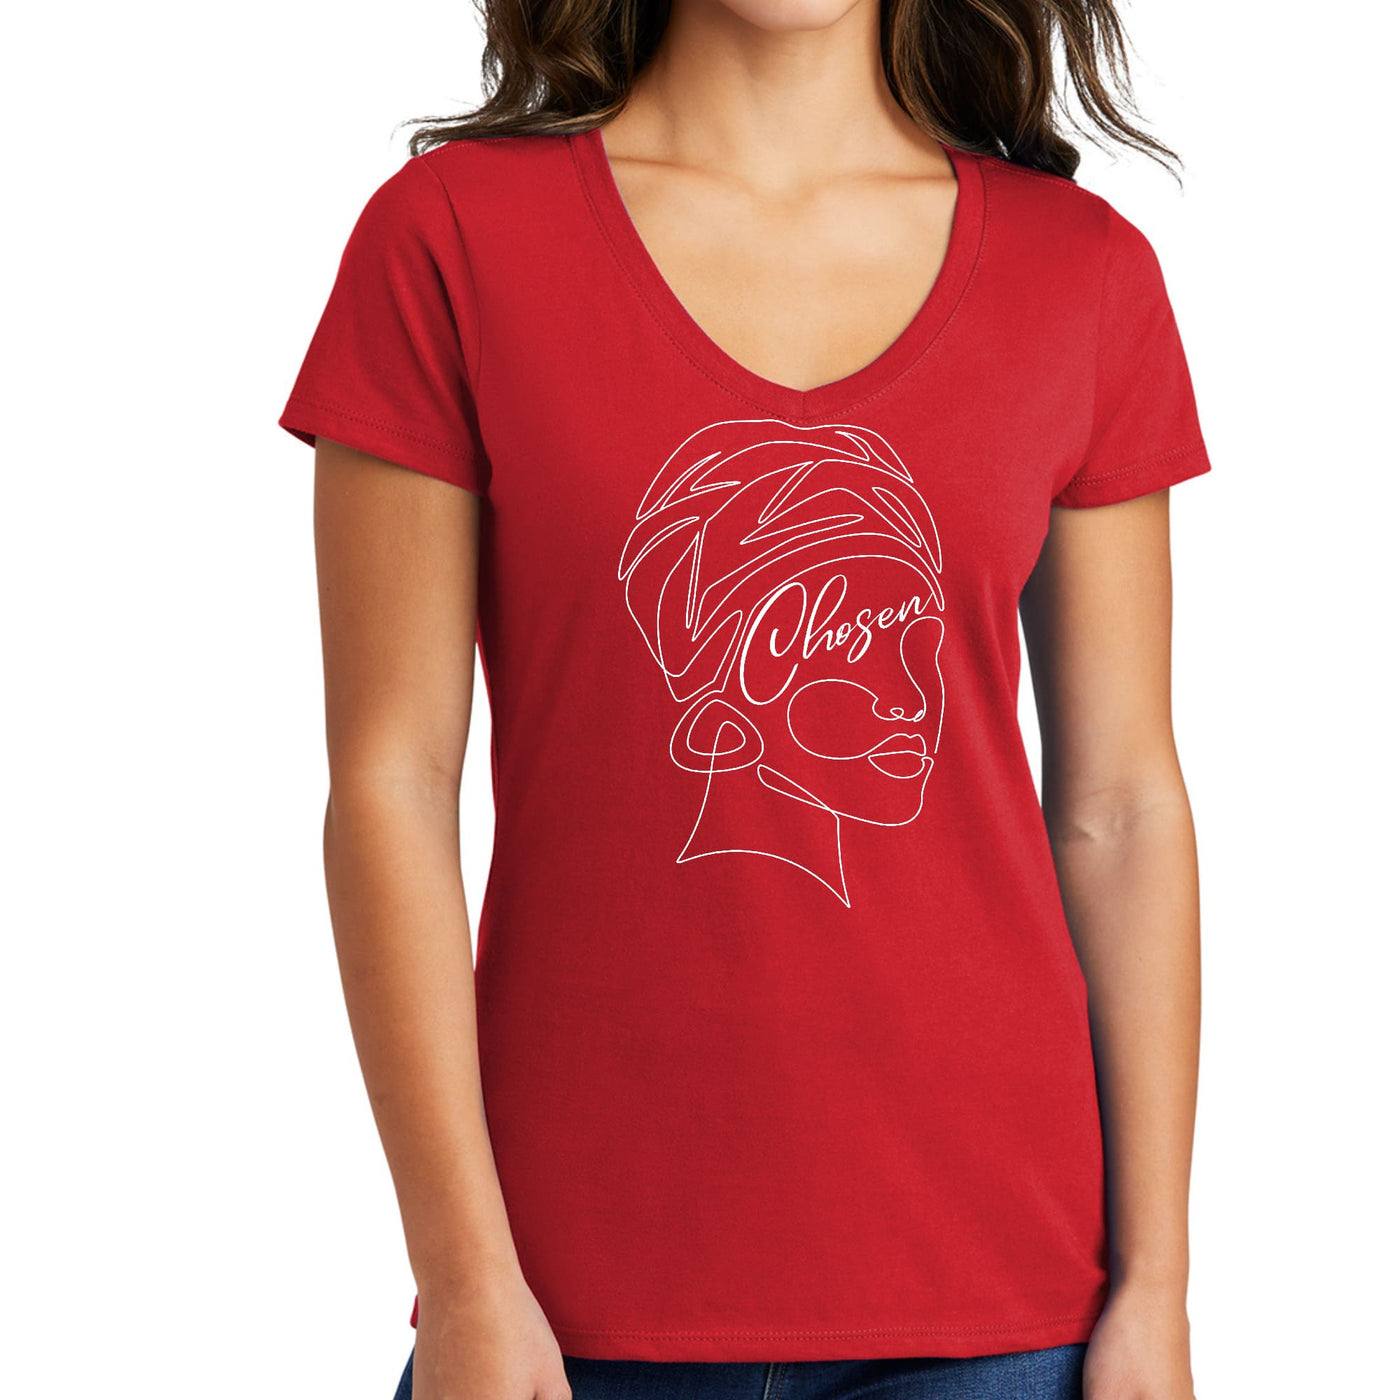 Womens V - neck Graphic T - shirt Say It Soul - Line Art Woman Self - Womens